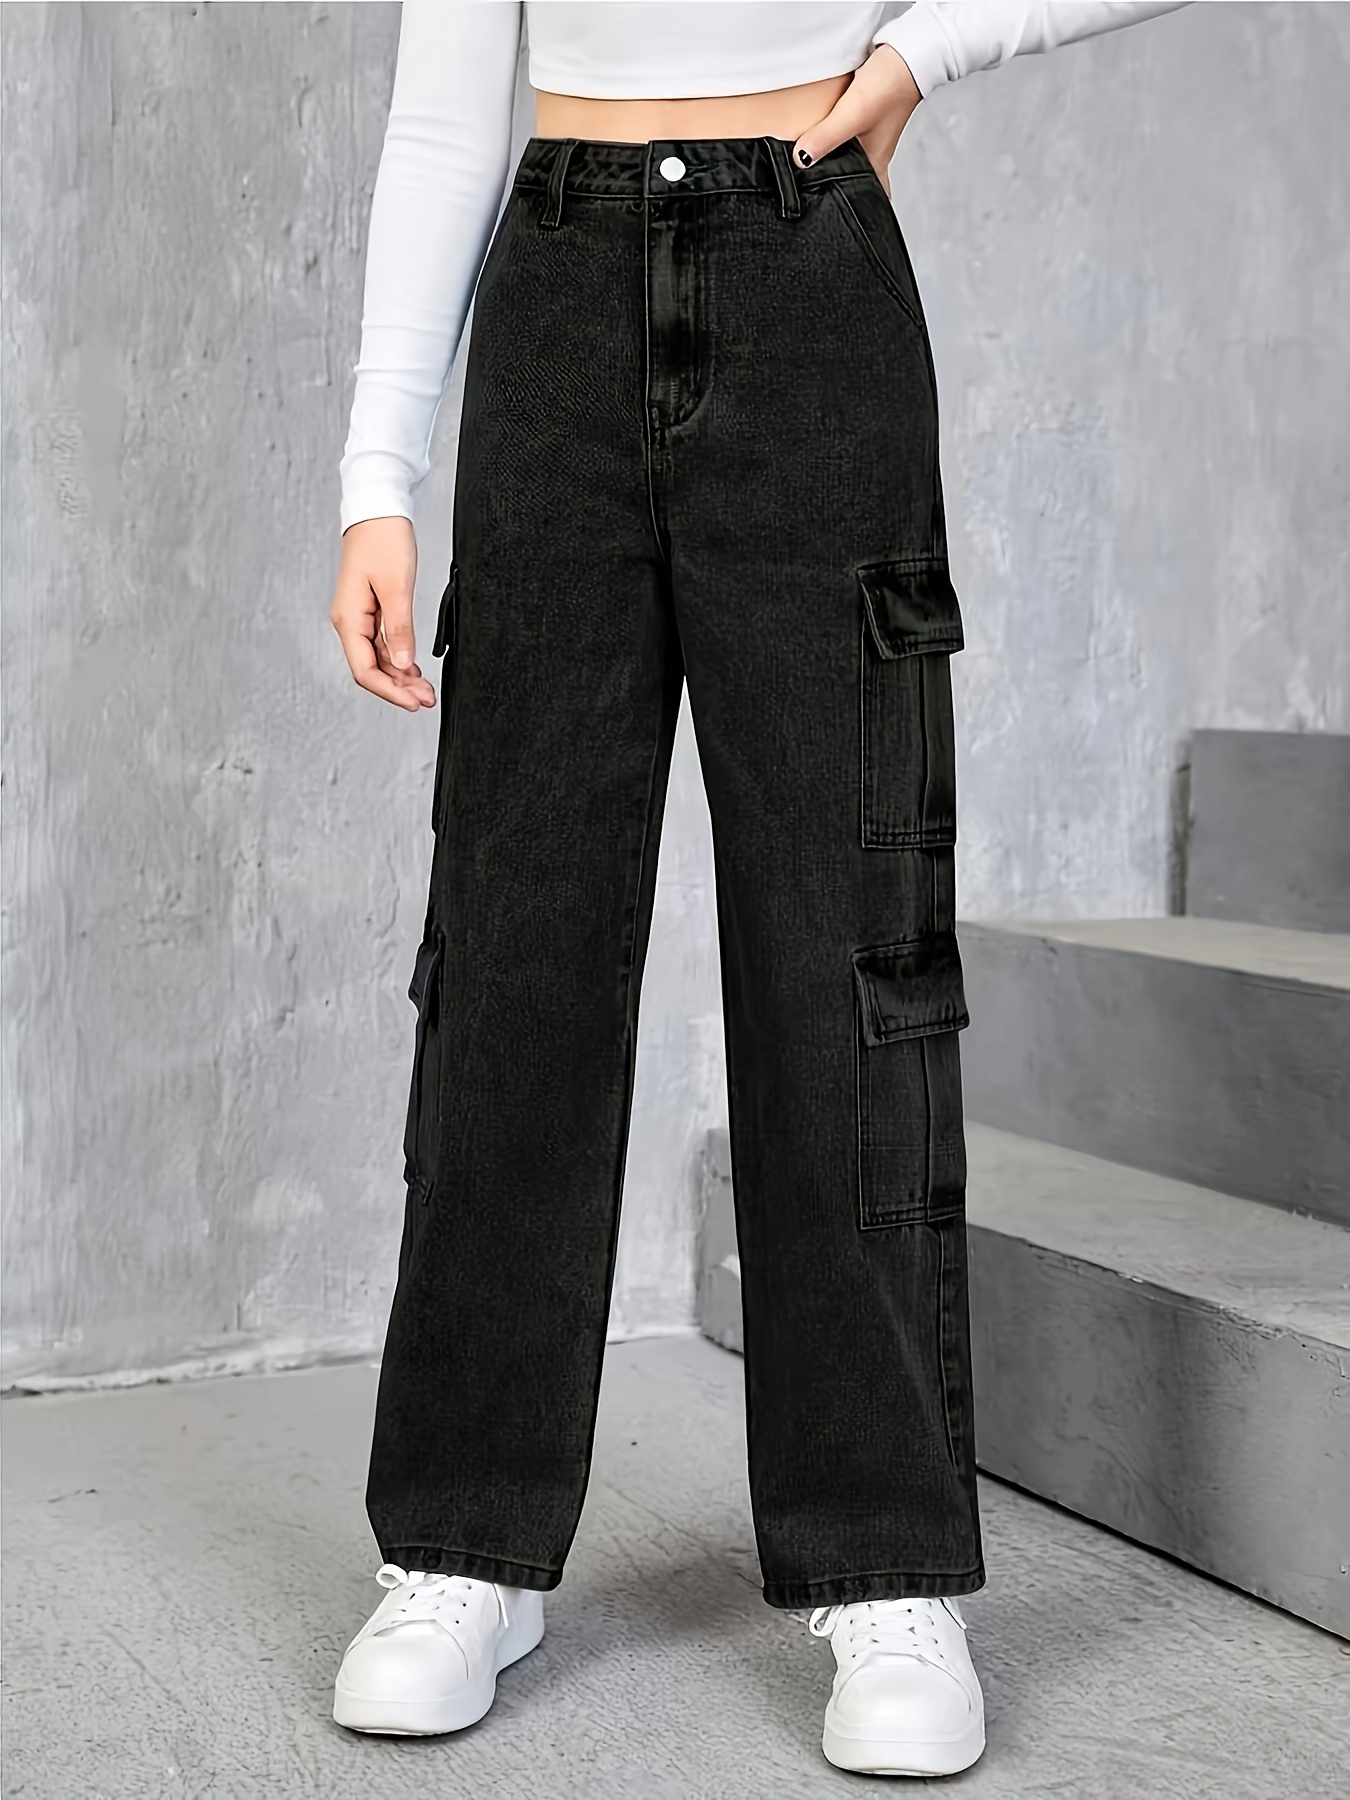 Girls Black Jeans Multi Pockets Street Style Cargo Pants